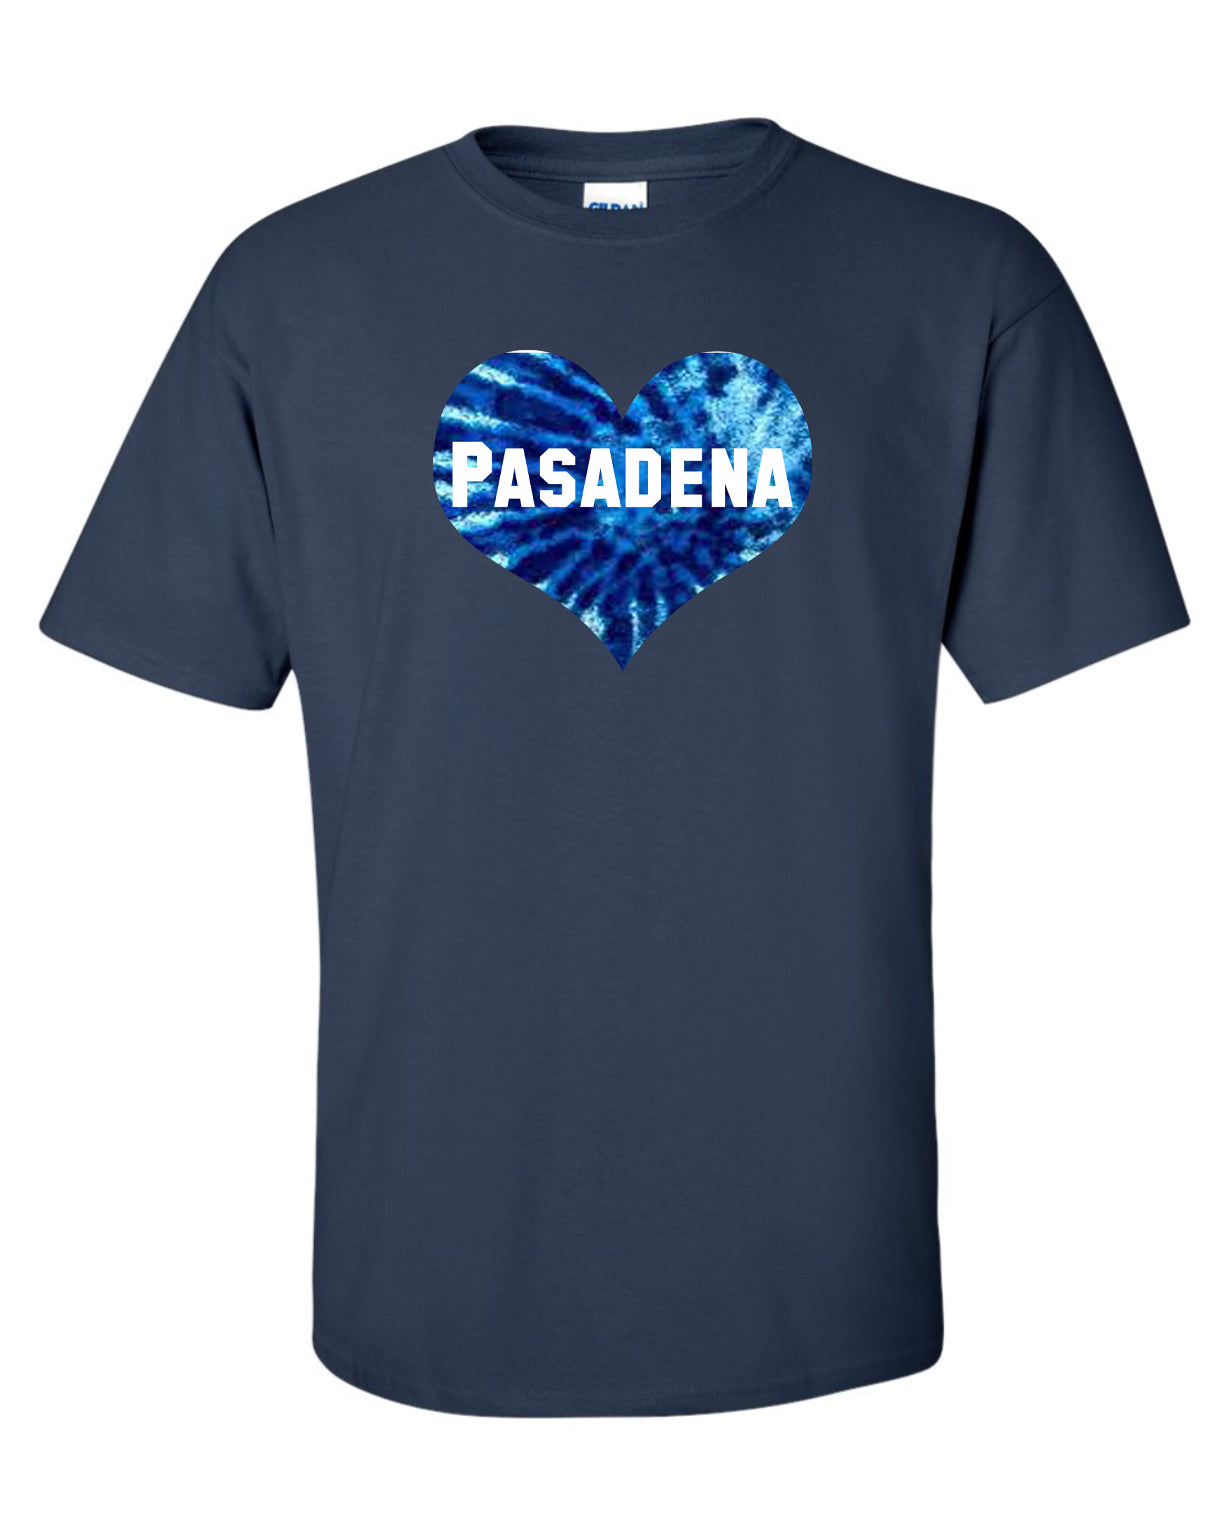 Pasadena Elementary Tie Dye Heart T-Shirt 2000/2000B